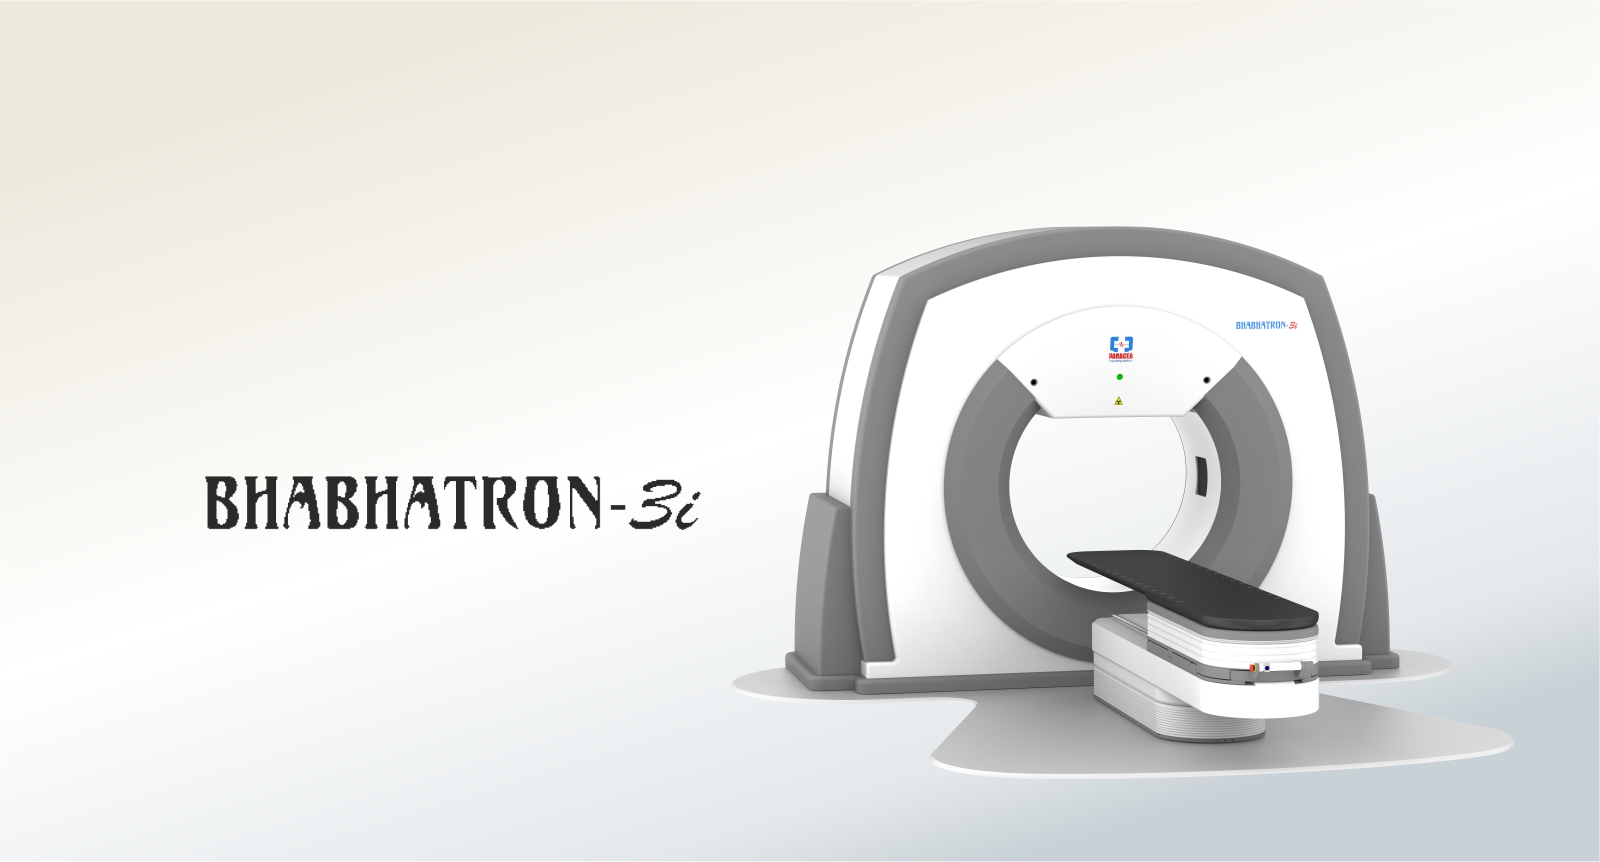 BHABHATRON - 3I